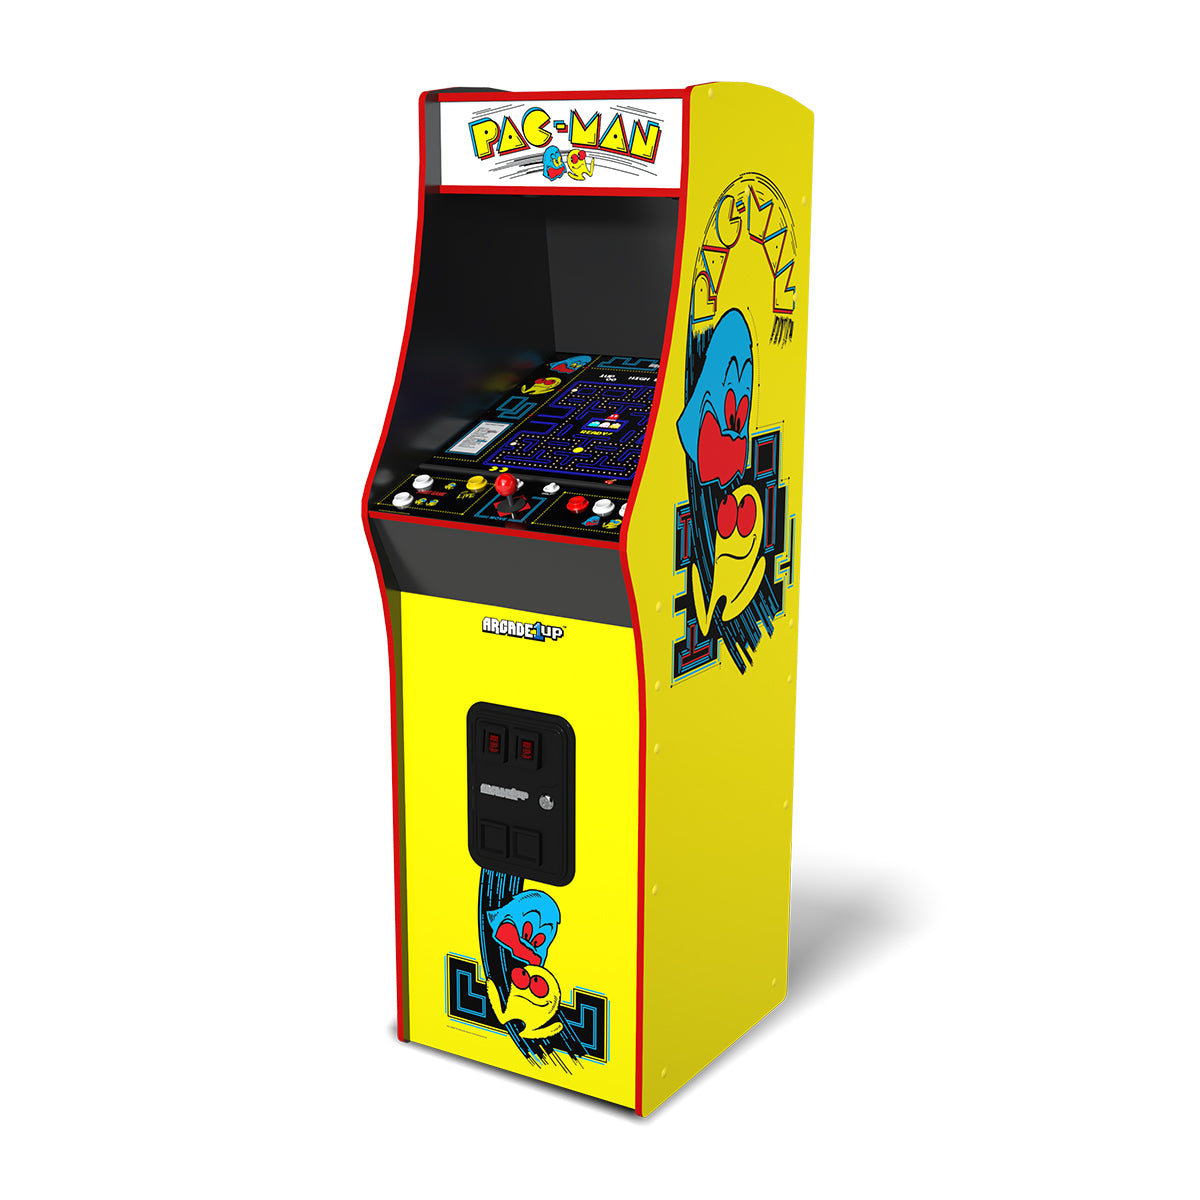 Arcade1up NEW PAC-MAN ARCADE RISERLESS